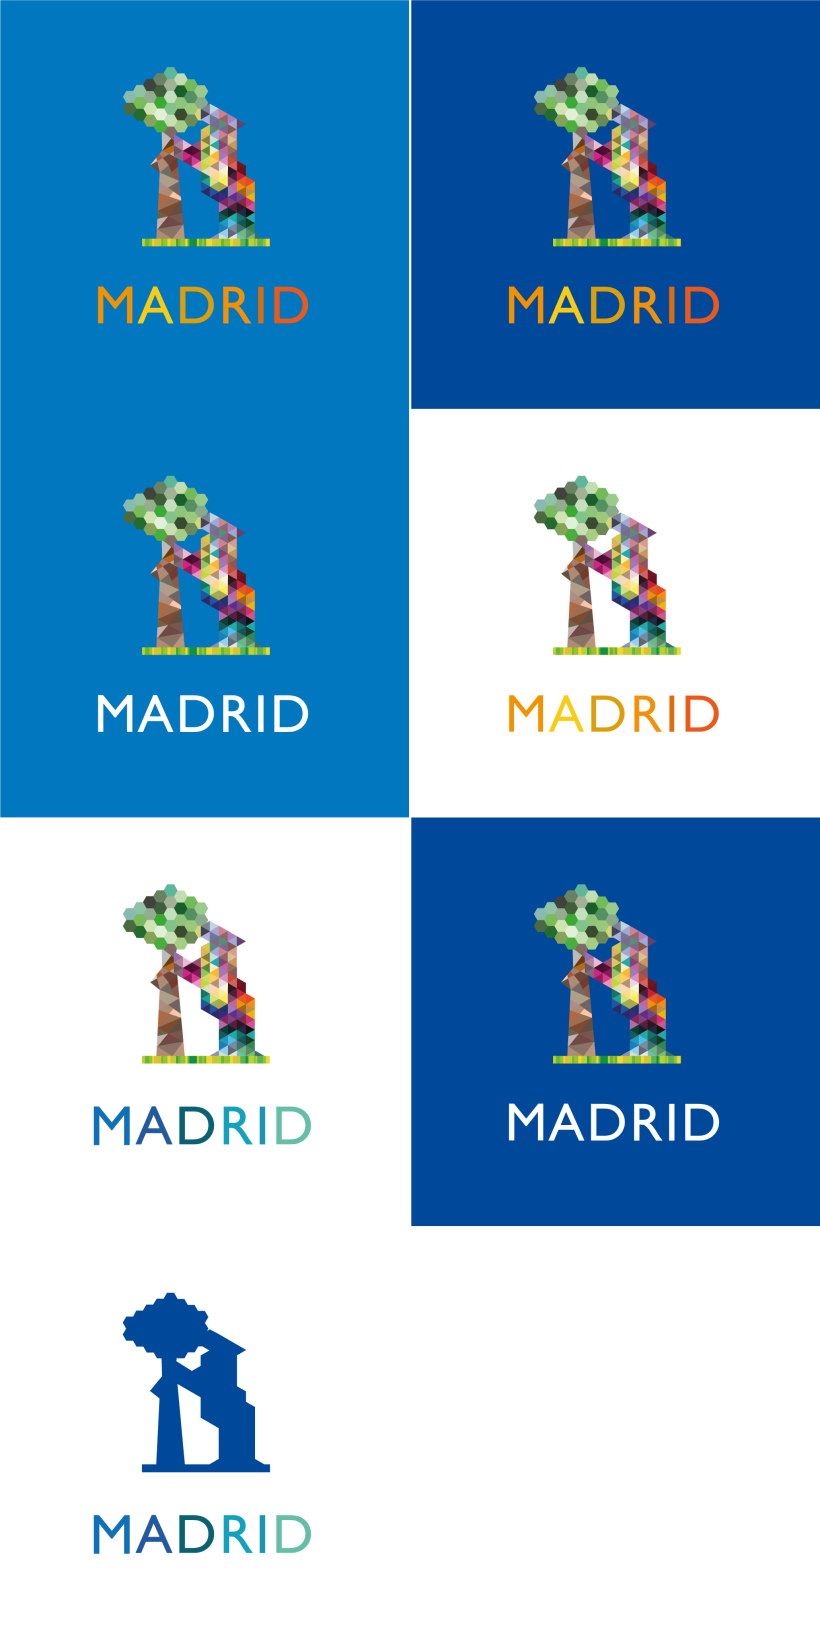 Branding Identity - Madrid 1